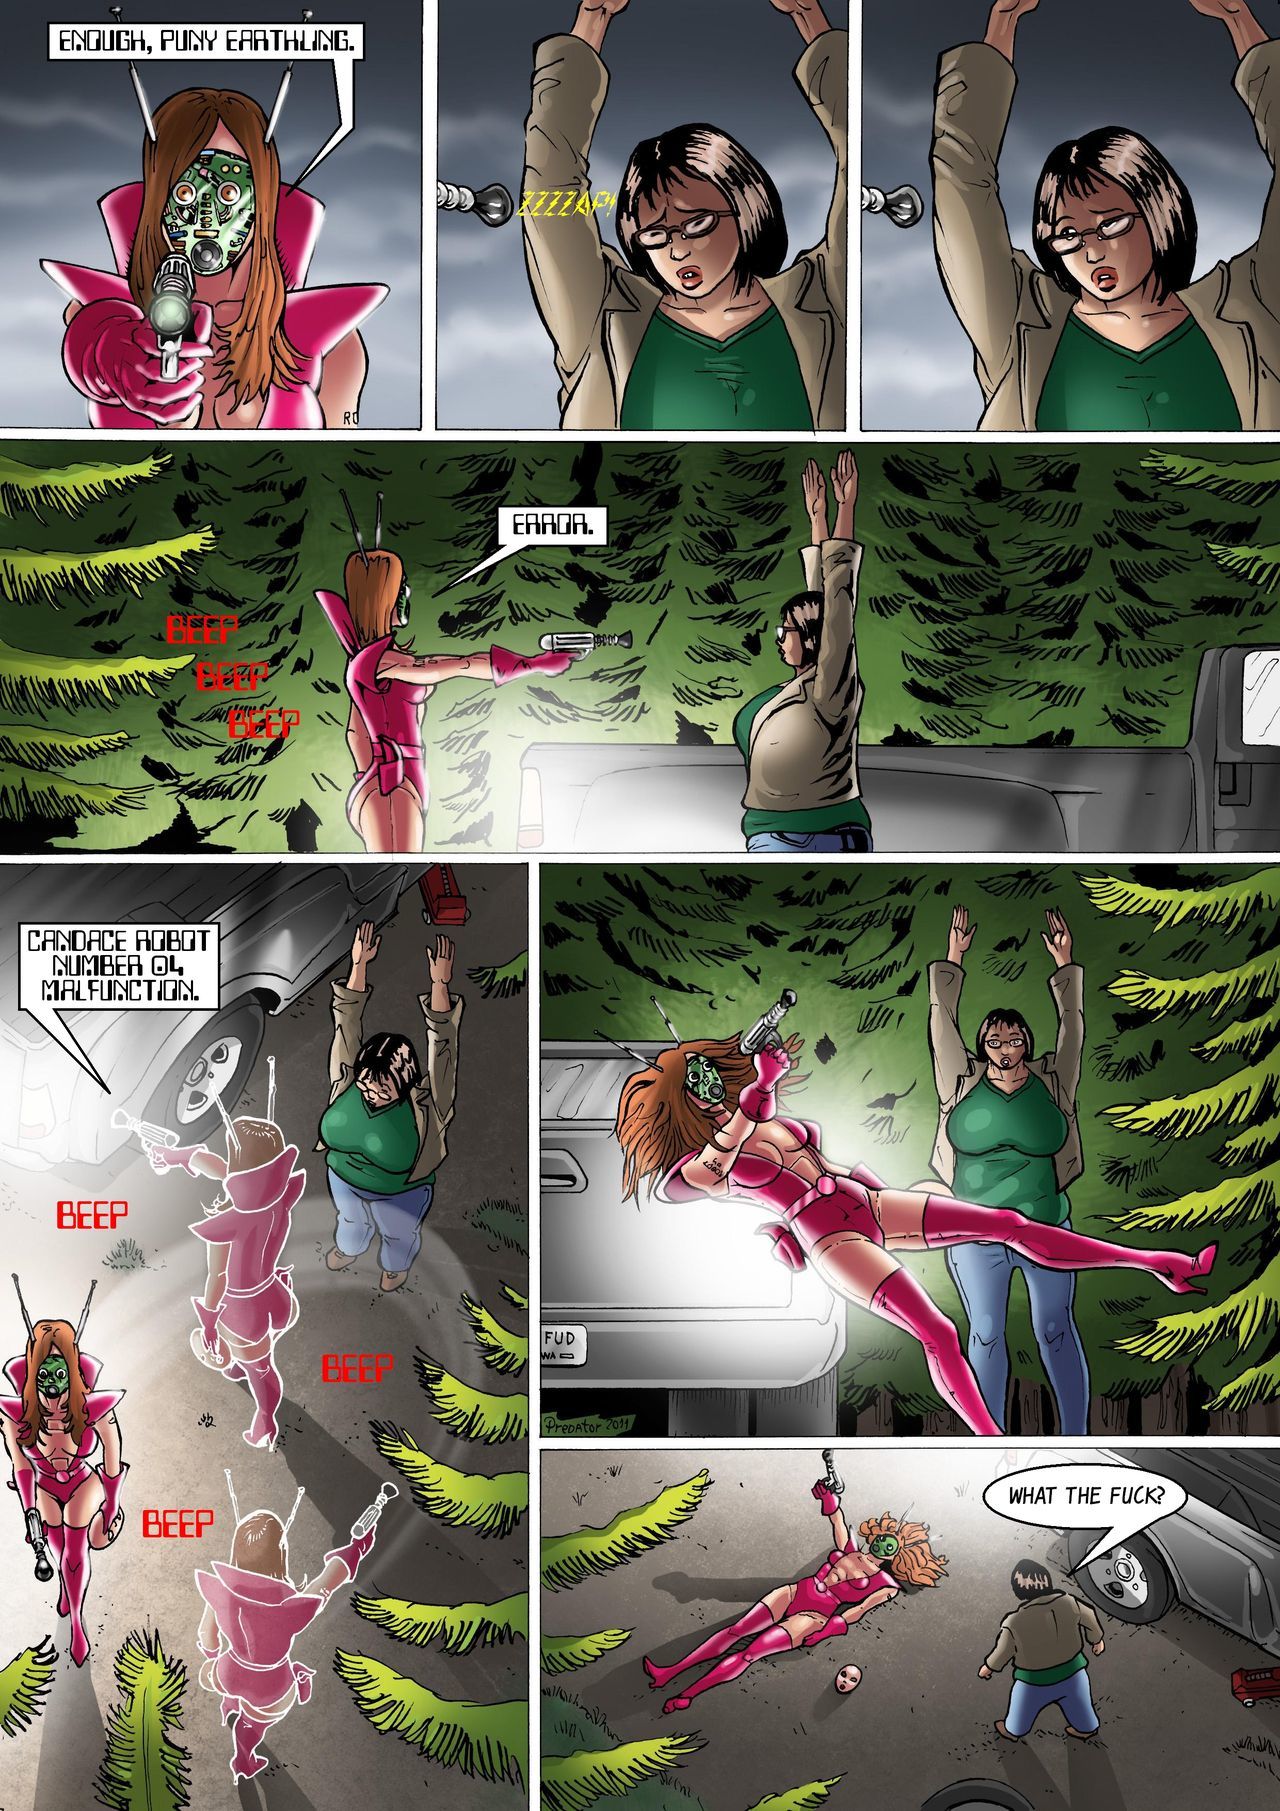 Future F.A.I.T. by Predator & Robotman page 11